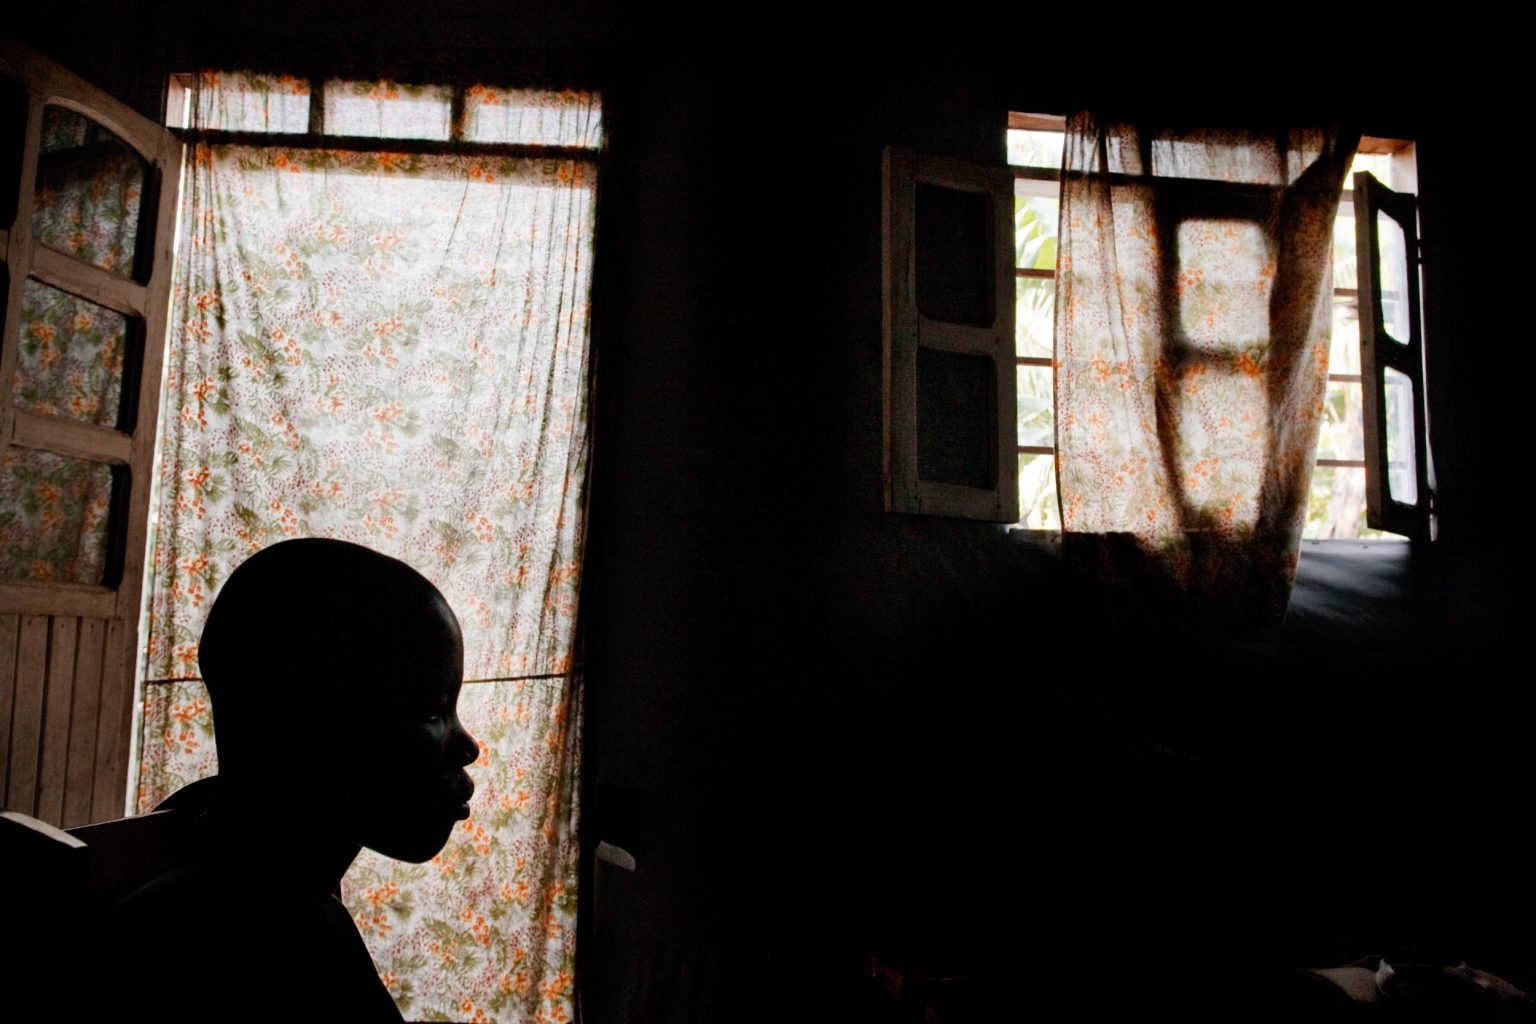 DR Congo, Nord Kivu  Goma
agosto 2008
Alfred, 16 anni, è nato in Ruanda. Nel '94 per, fuggire dalla guerra, si trasferì con la zia in DR Congo nei pressi di Massisi. Suo padre, governatore della provincia di Kibuie, venne accusato di genocidio e arrestato. Alfred nel 2007 è entrato a far parte, con la forza, della FDLR. Dopo circa un anno la FRDC lo ha arrestato e trasferito in un carcere minorile a Kinshasa. Poi Gazie a Save The Children adesso vive con una famiglia nei pressi di Goma.

DRC, North Kivu  Goma
August 2008
Alfred, 16 years old, was born in Rwanda.  He moved to Massisi, DRC, with his aunt in 1994 to escape the war. His father, governor of the Kibuie province, was arrested for genocide. Alfred in 2007 was enrolled, against his will, in the FDLR. After about a year the FRDC arrested him and transferred him to a prison in Kinshasa. Thanks to Save The Children Alfred now lives with a family in the Goma area.